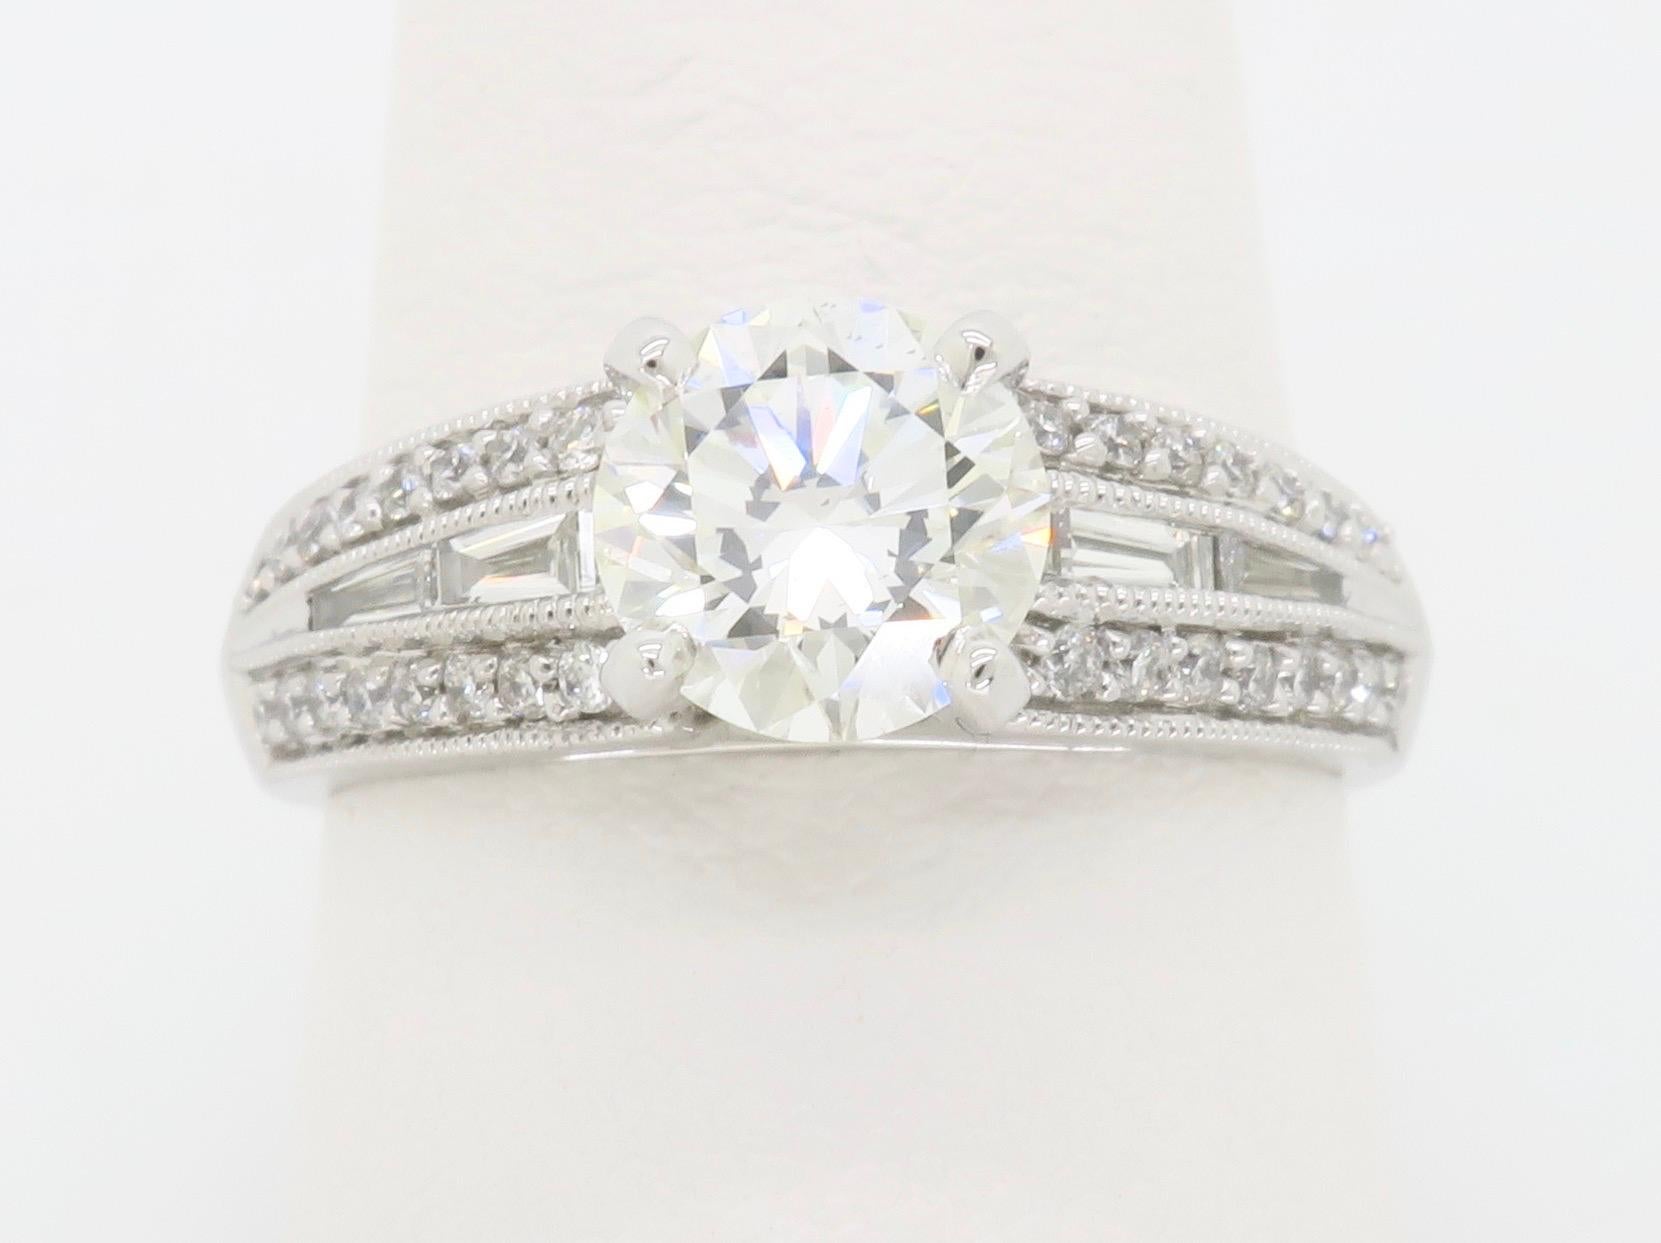 Unique diamond engagement ring with 1.48ct of diamonds. 

Center Diamond Carat Weight: 1.08CT
Center Diamond Cut: Round Brilliant  
Center Diamond Color: J
Center Diamond Clarity: VS2
Total Diamond Carat Weight: Approximately 1.48CTW
Metal: 14k